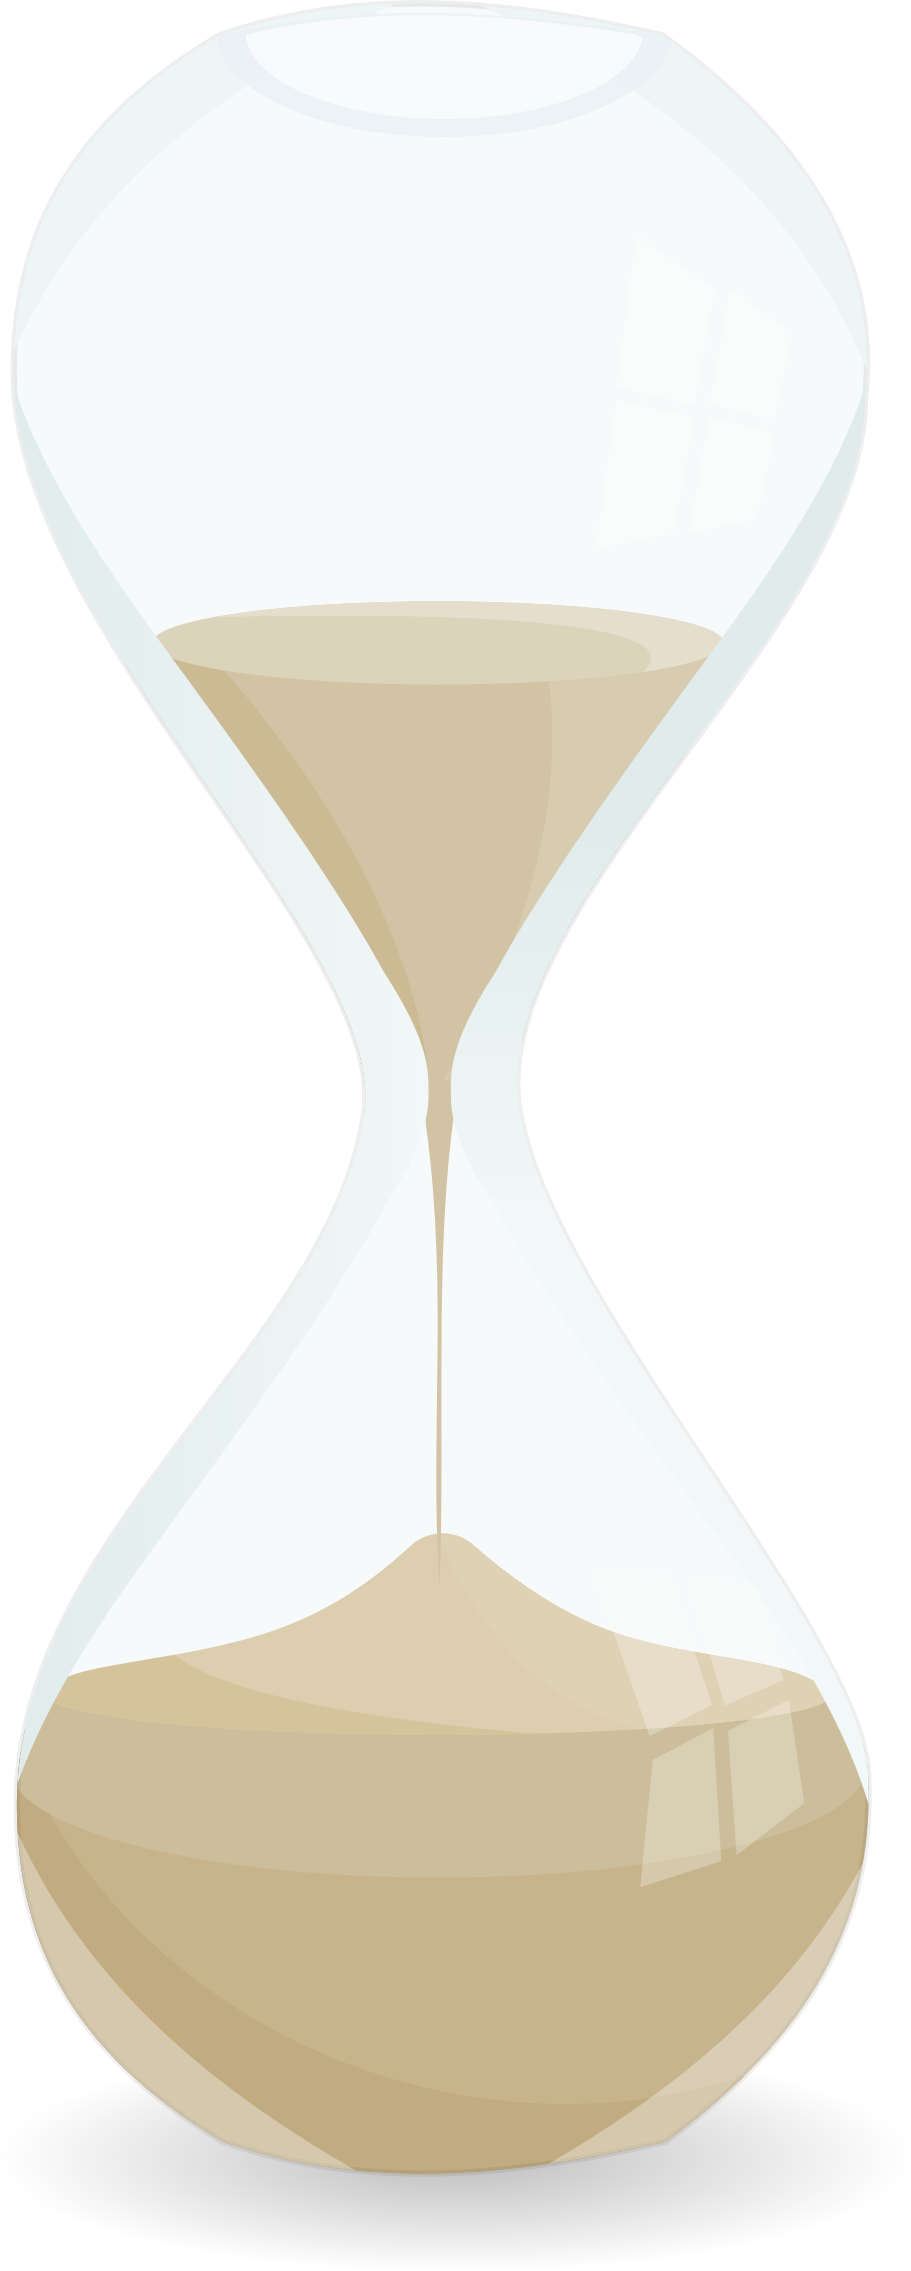 911 X 2271 3 - Transparent Sand Clock Png Clipart (911x2271), Png Download